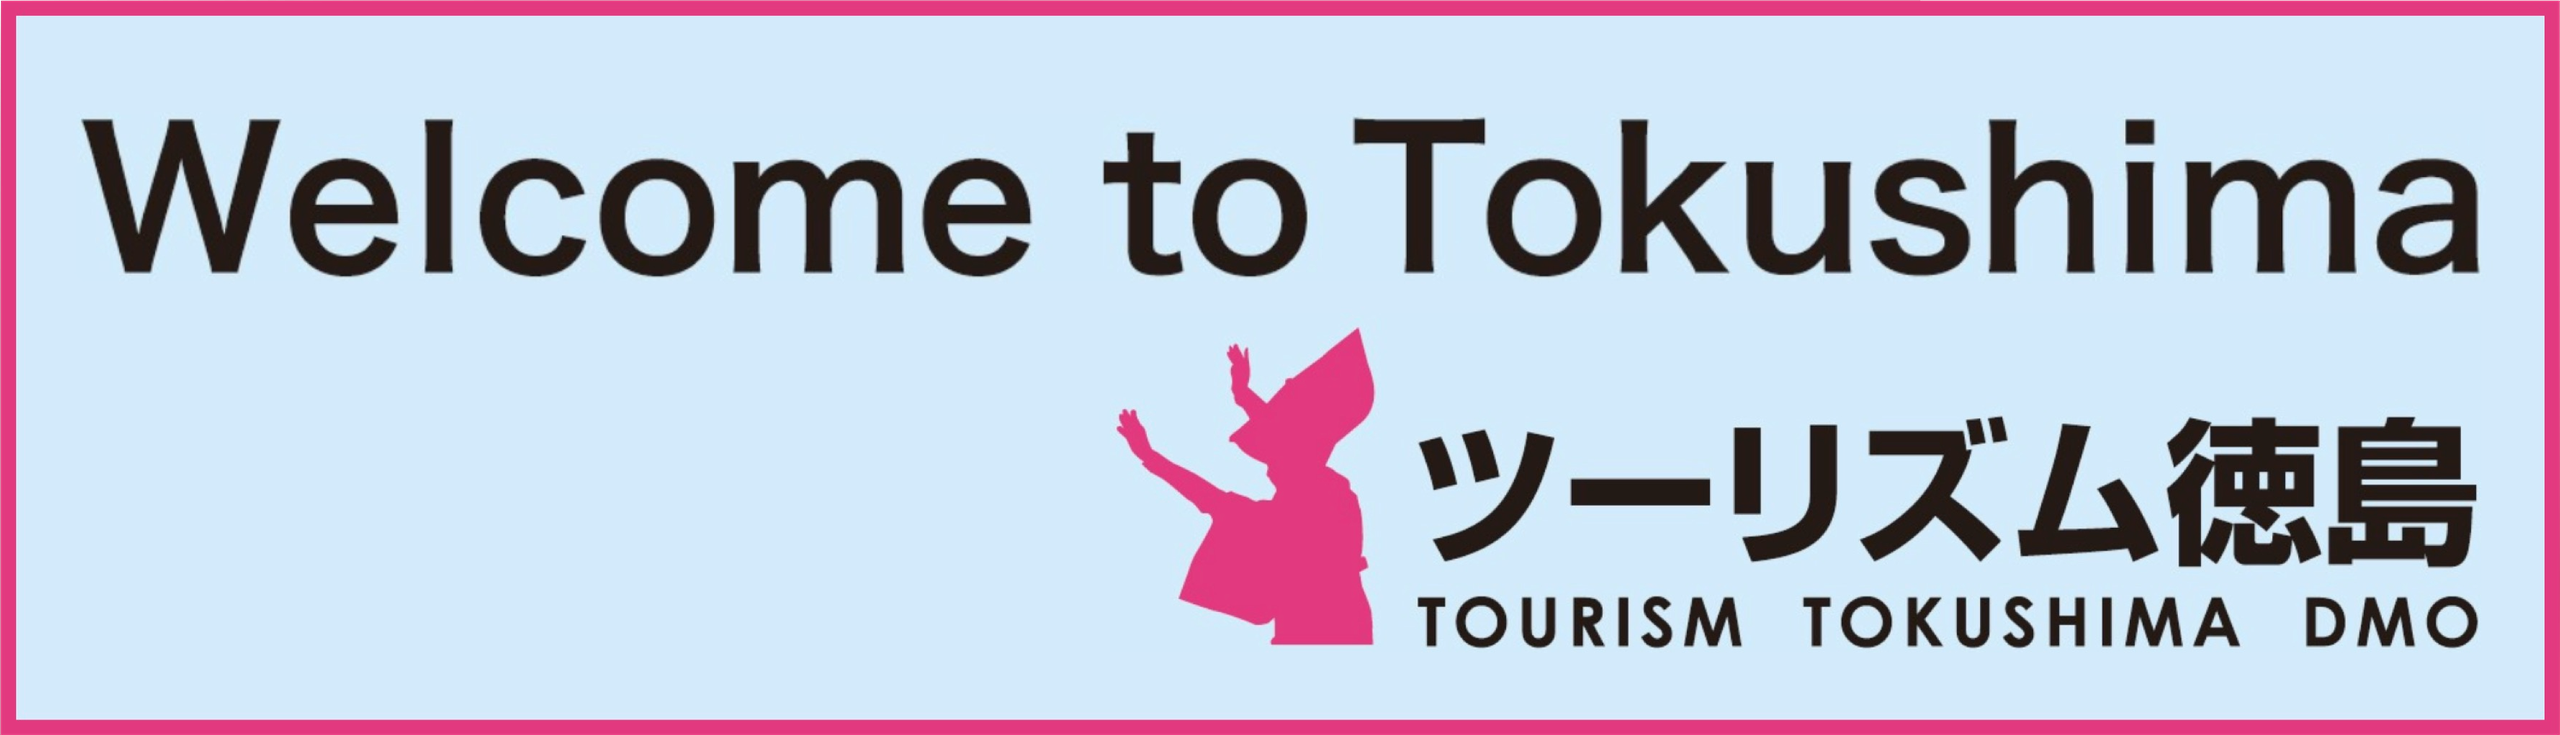 Welcome to Tokushima